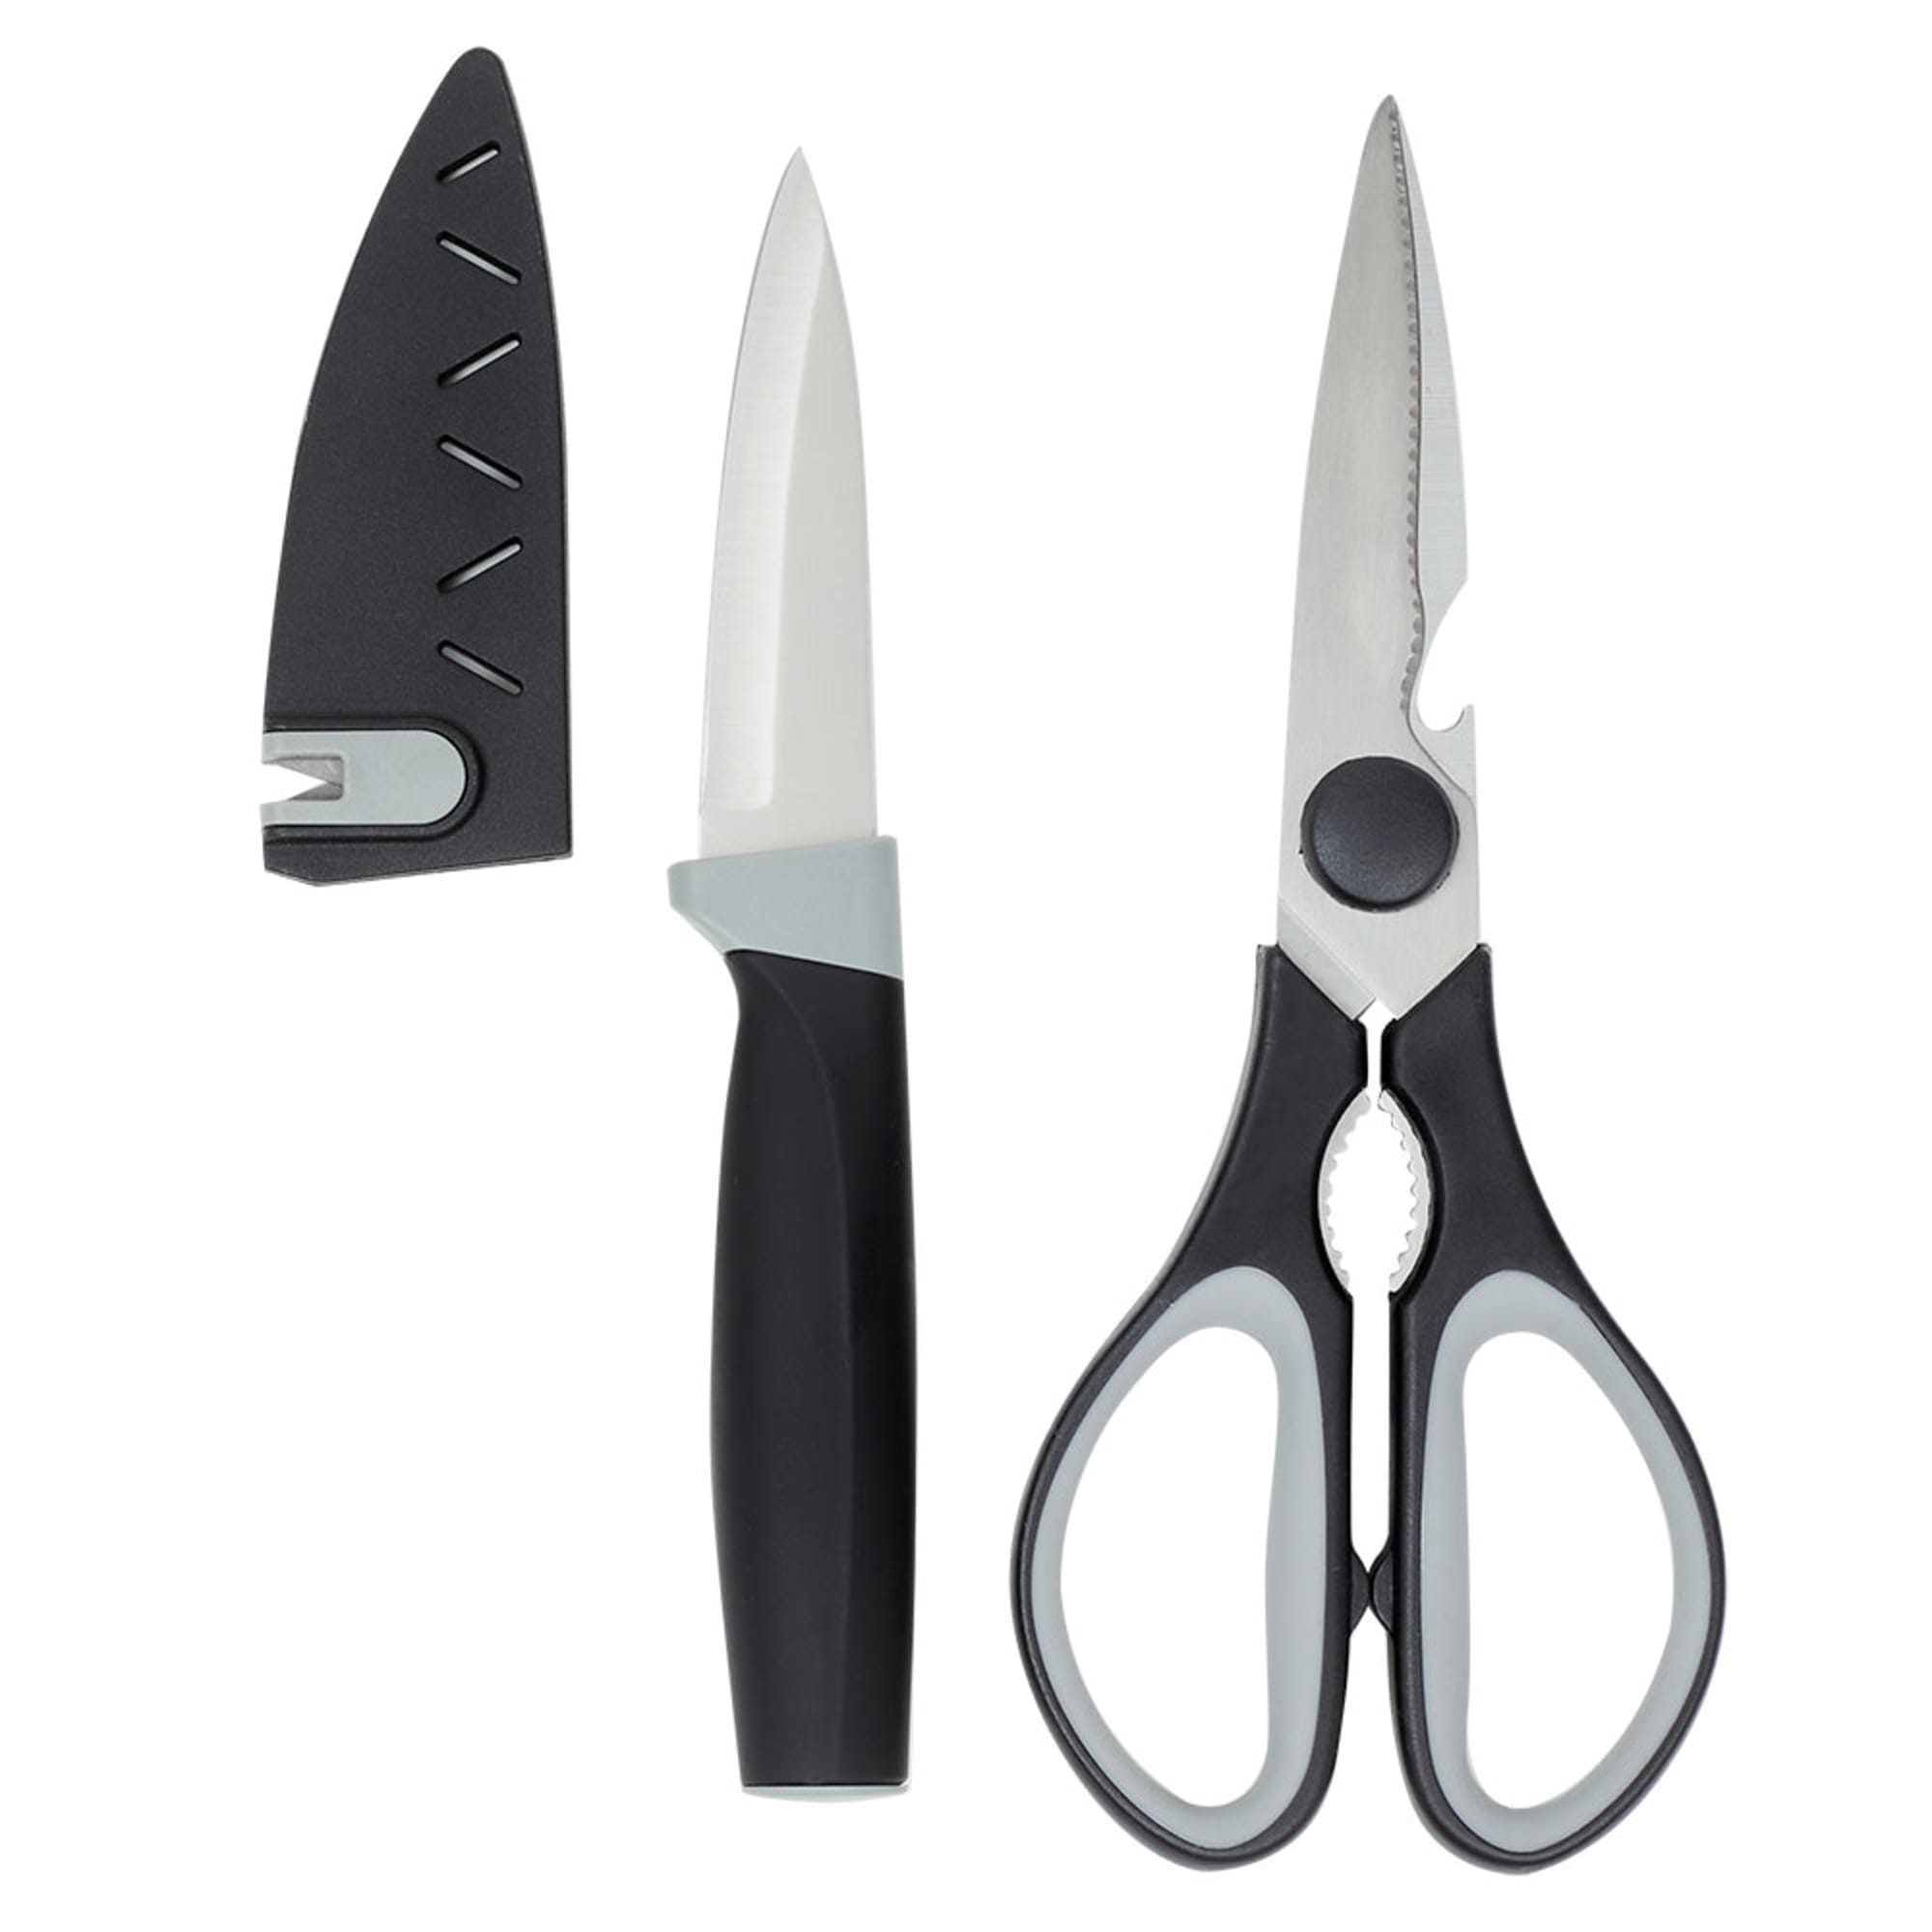 Home Basics 3 Piece Knife and Scissor Set $4.00 EACH, CASE PACK OF 12